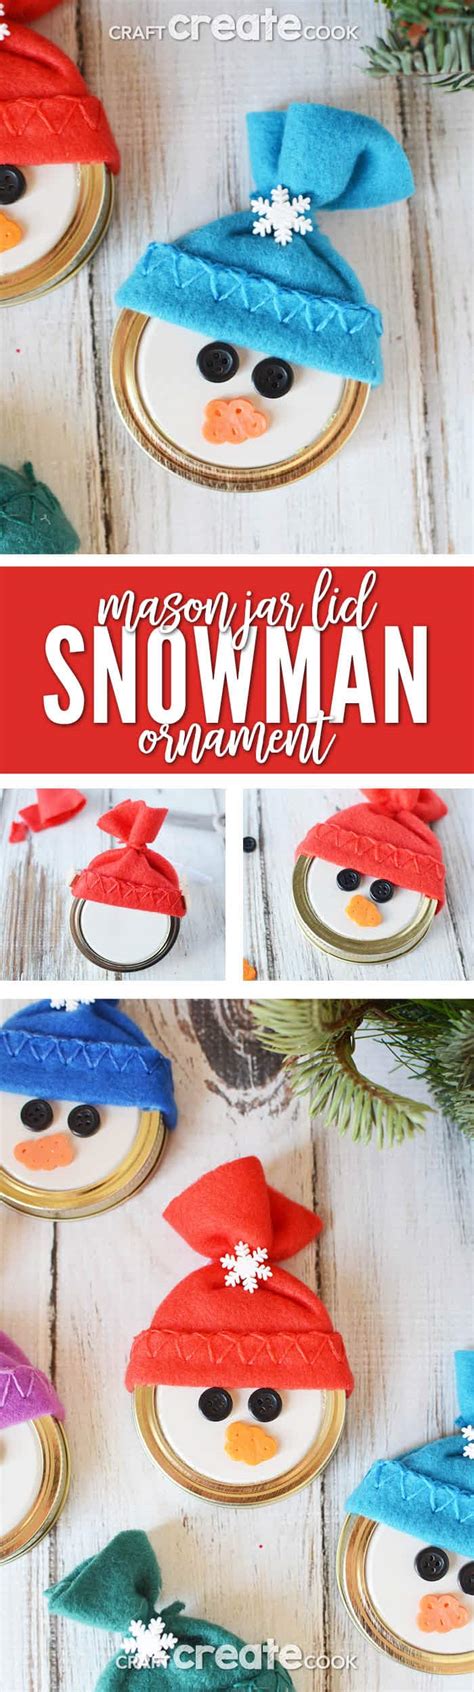 Mason Jar Lid Snowman Ornament Craft Create Cook